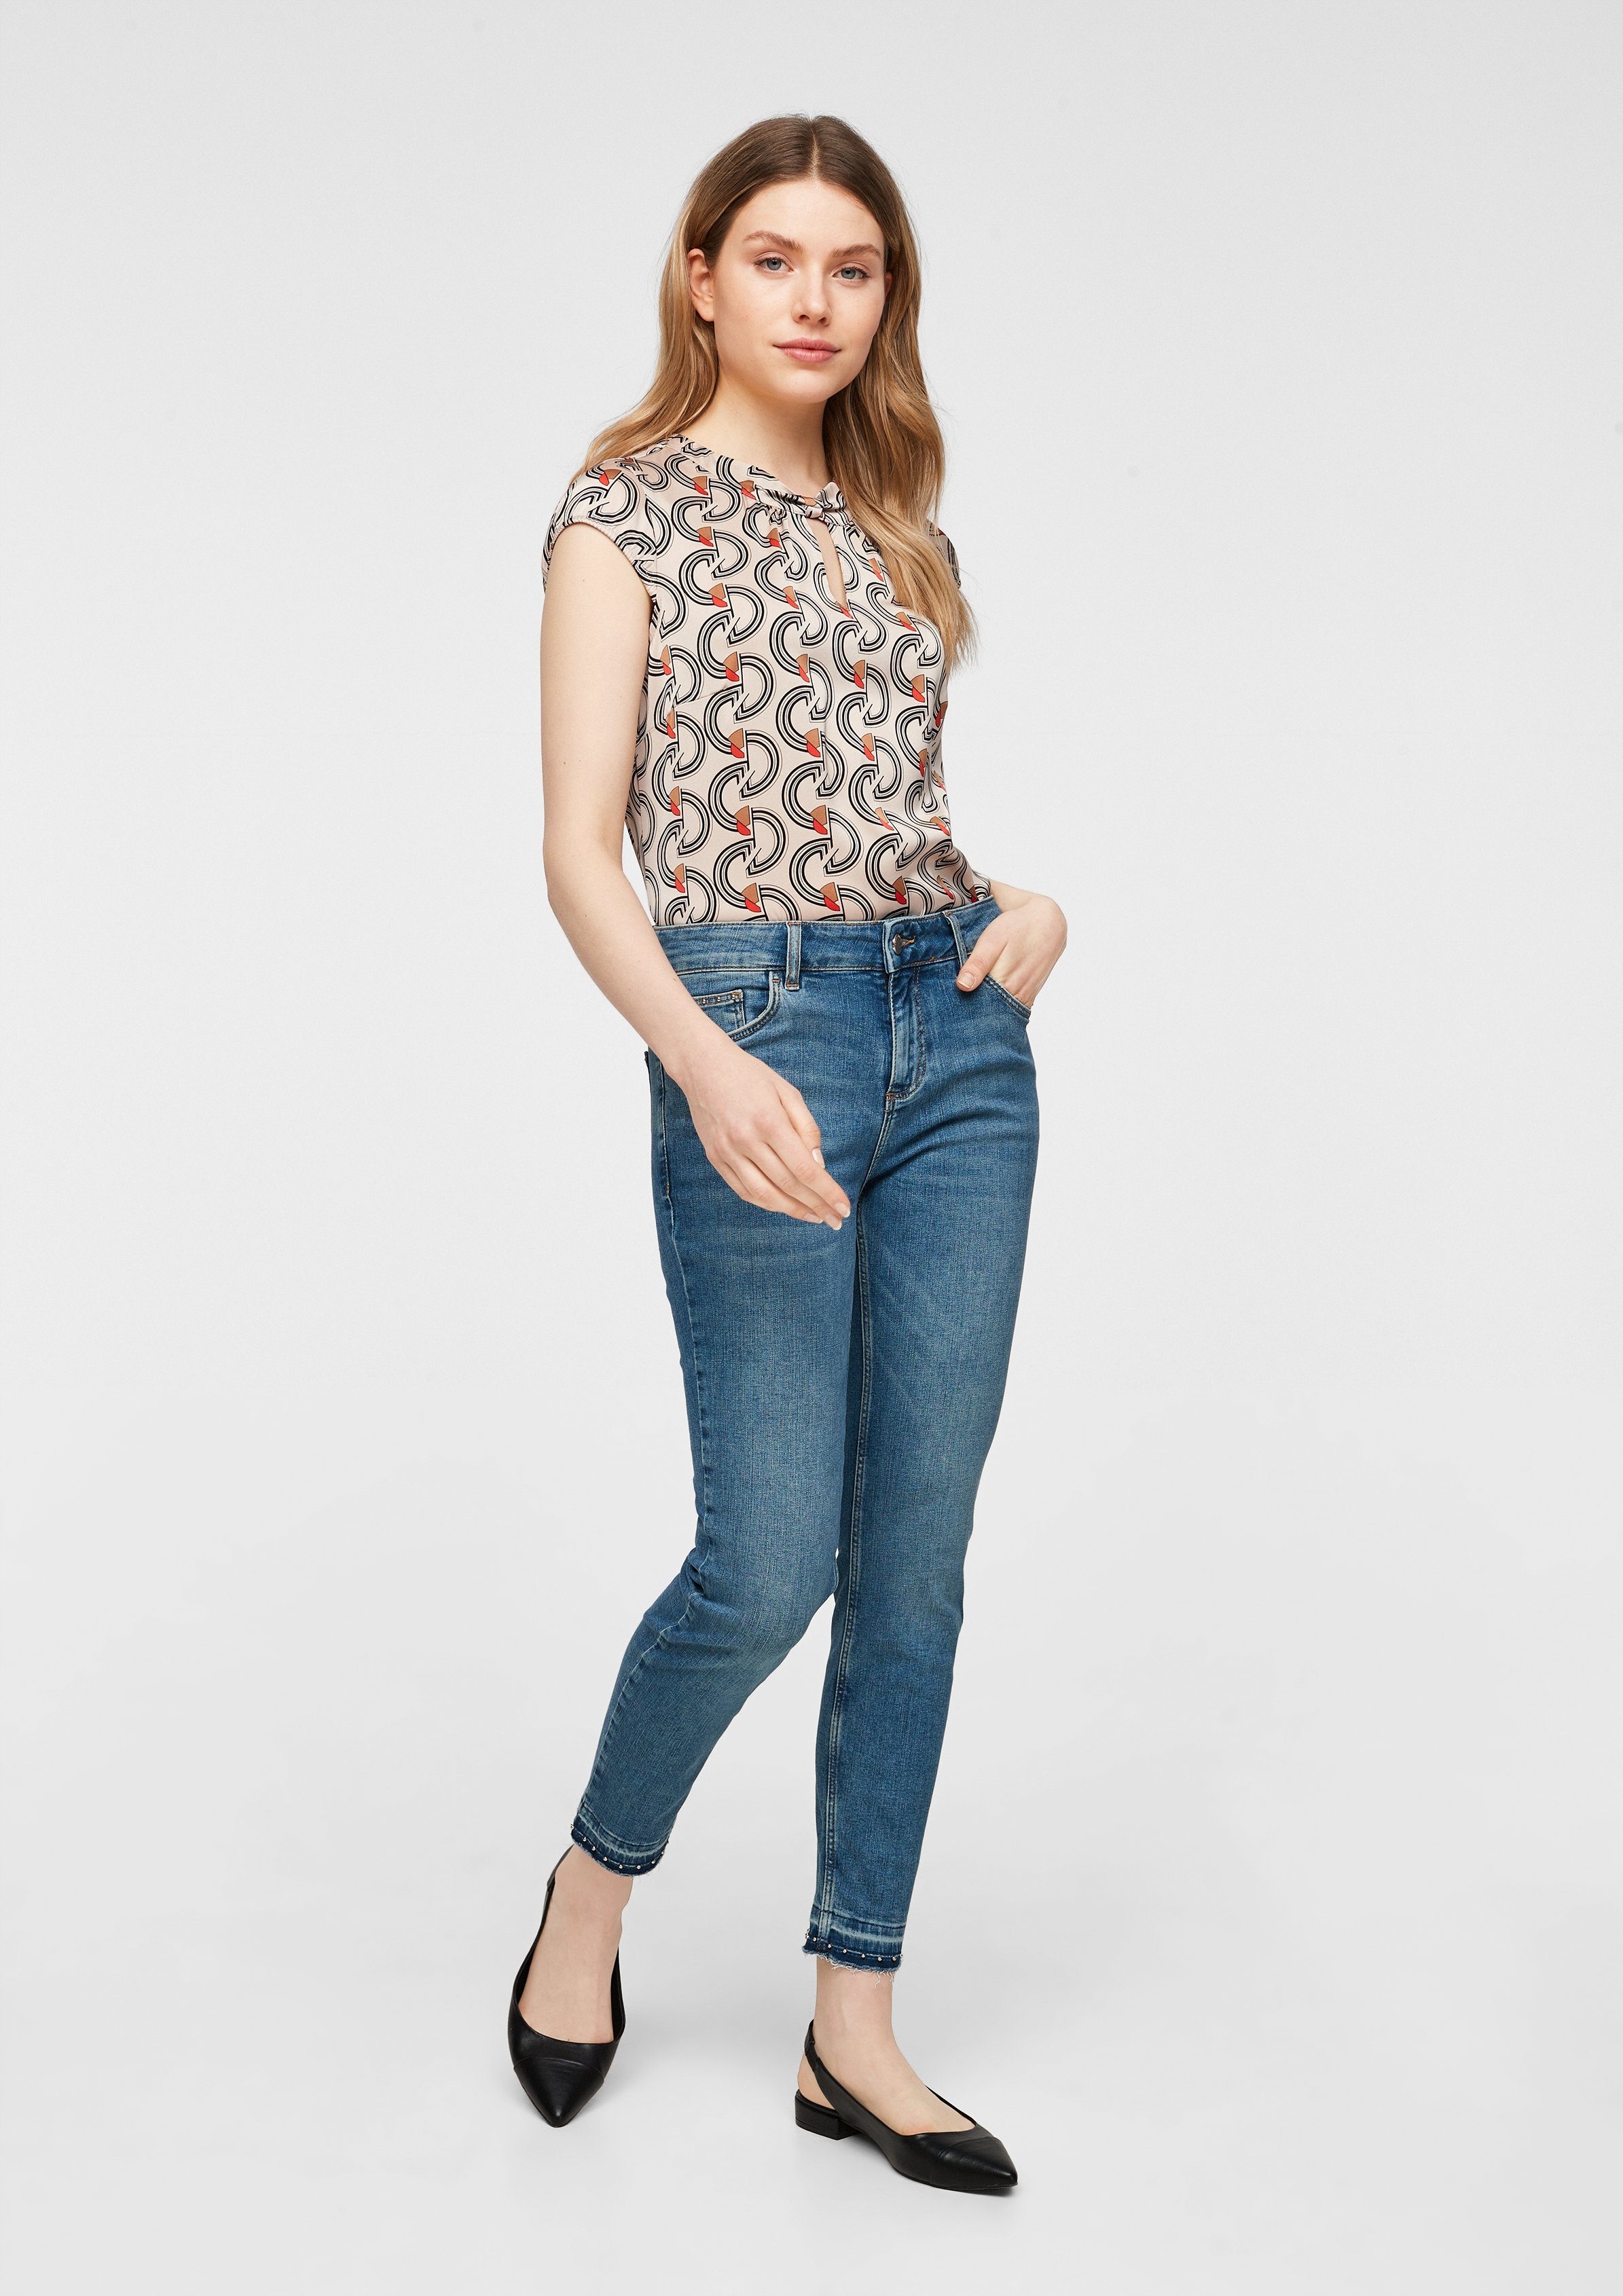 Damen Jeans comma casual identity 5-Pocket-Jeans Skinny Fit: Stretchjeans mit Nieten Waschung, Nieten, Leder-Patch